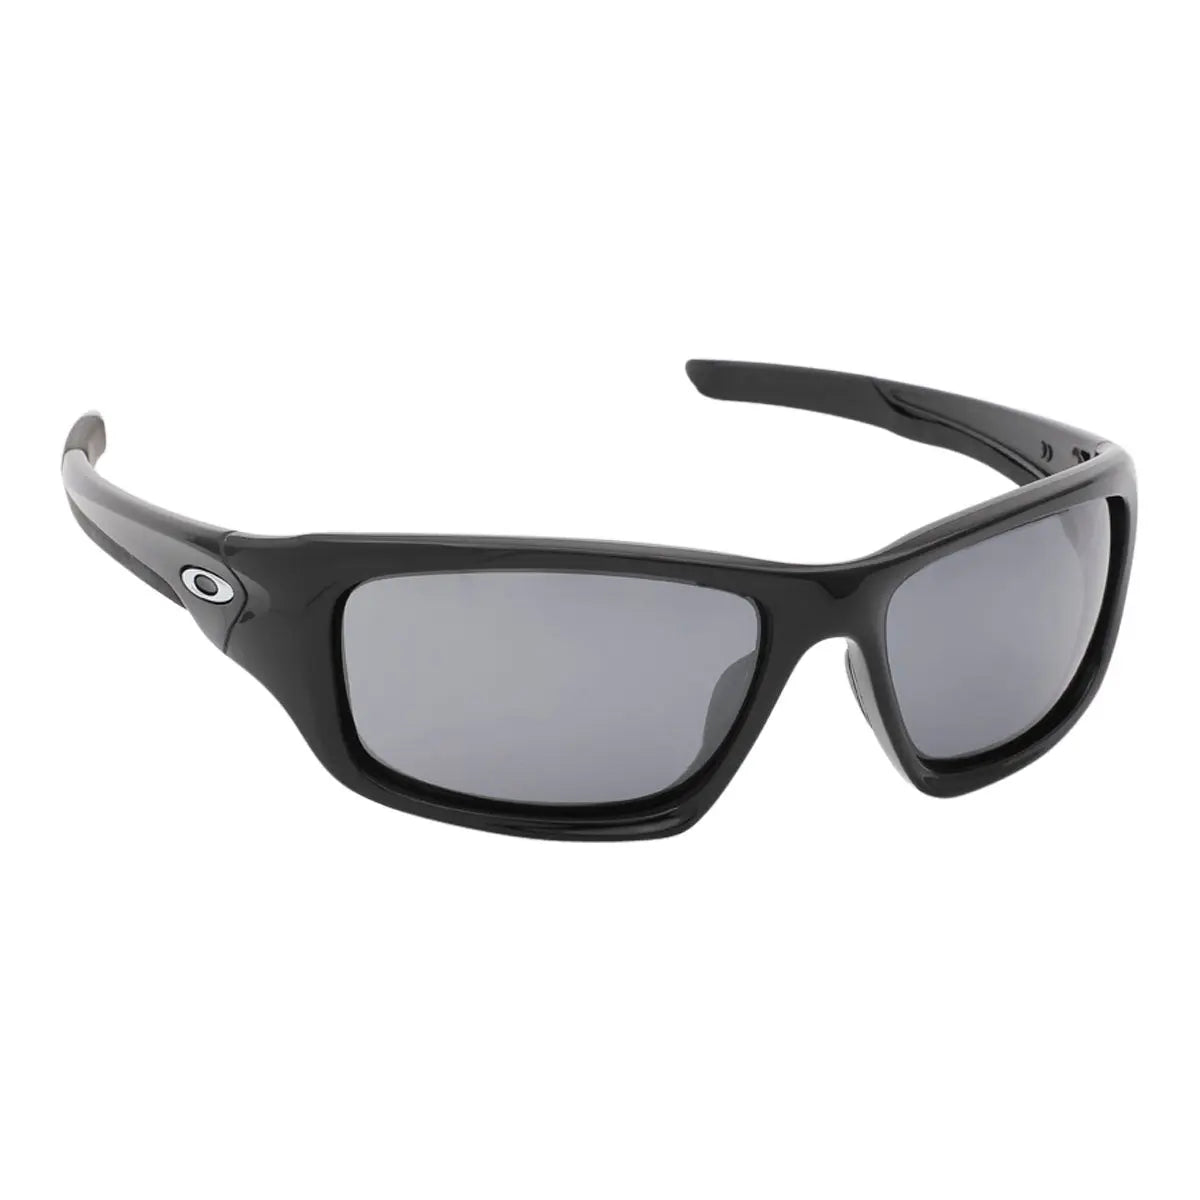 oakley men's valve polarized sunglasses,cheap - OFF 55% 